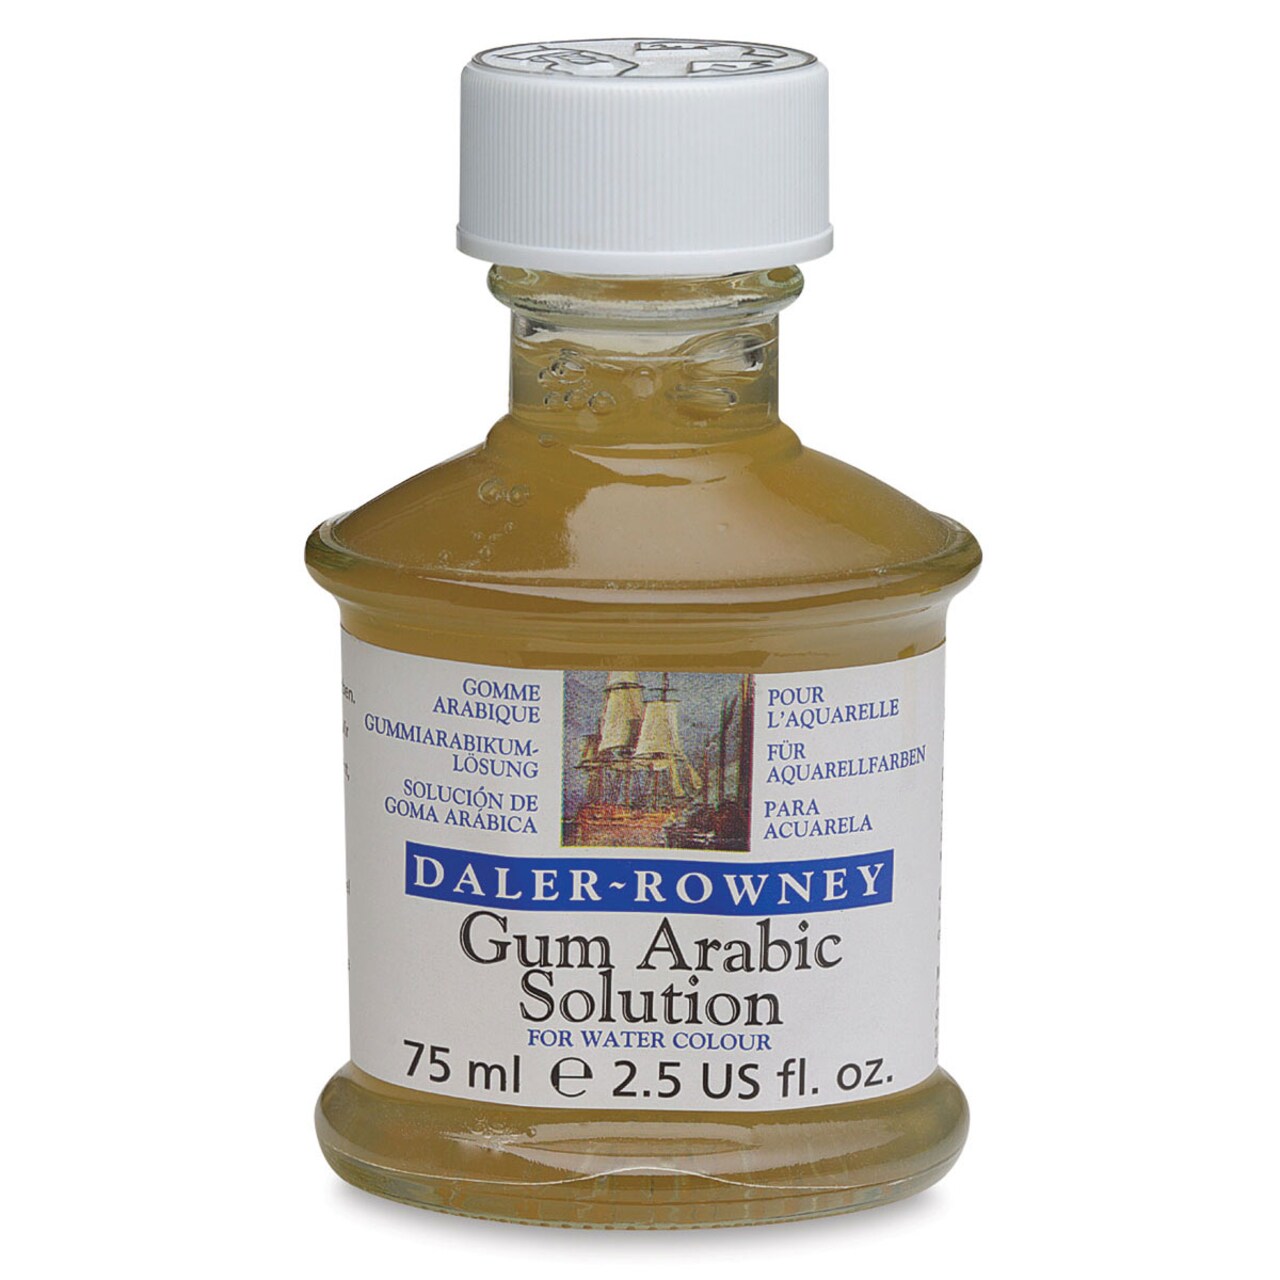 Daler-Rowney Gum Arabic - 75 ml bottle